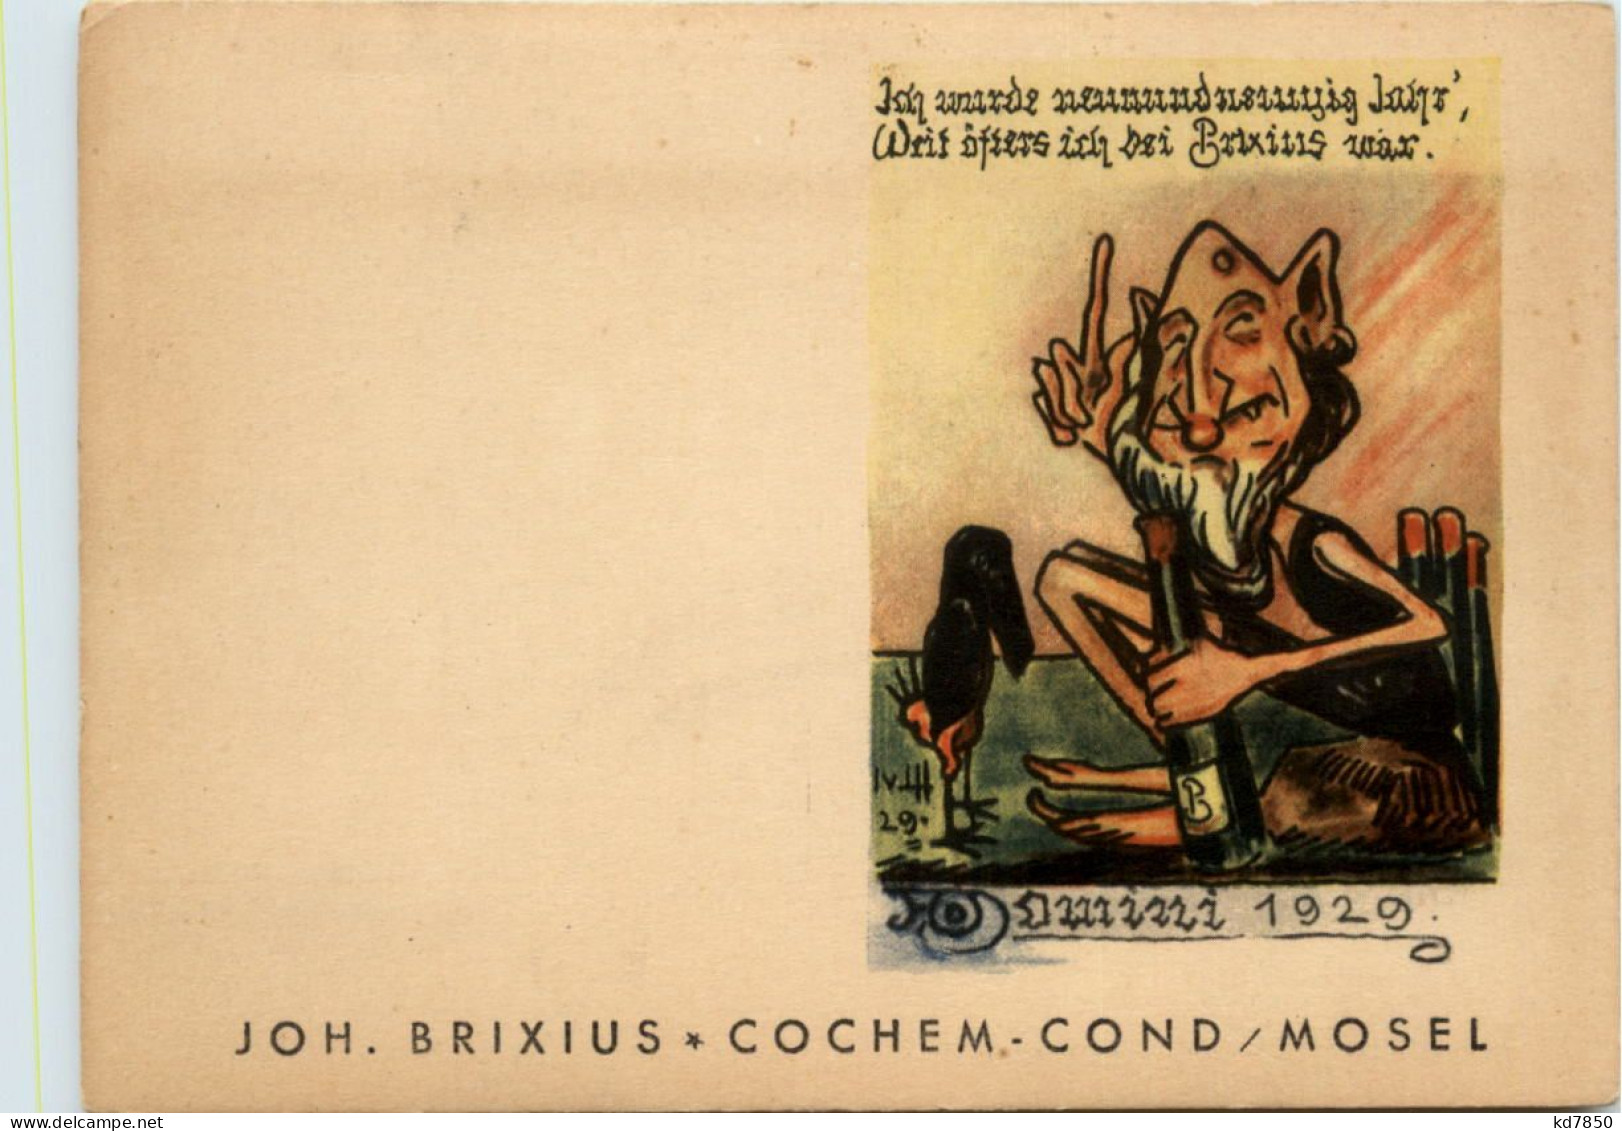 Cochem-Cond/Mosel, Joh. Brixius - Cochem